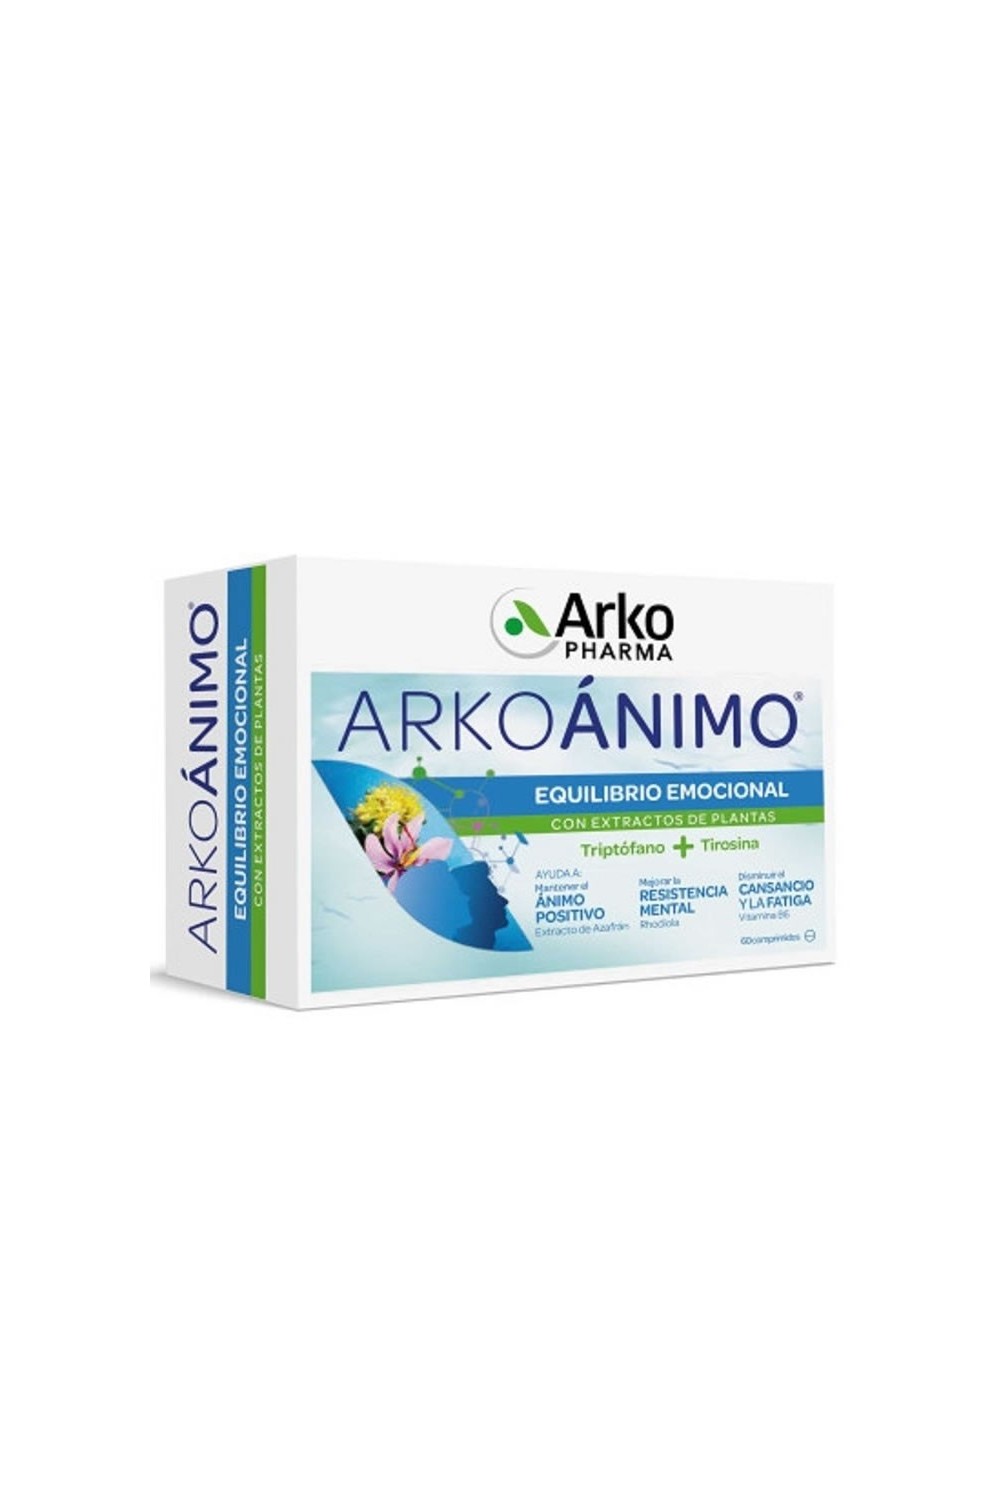 Arkopharma Arkoanimo 60 Tablets